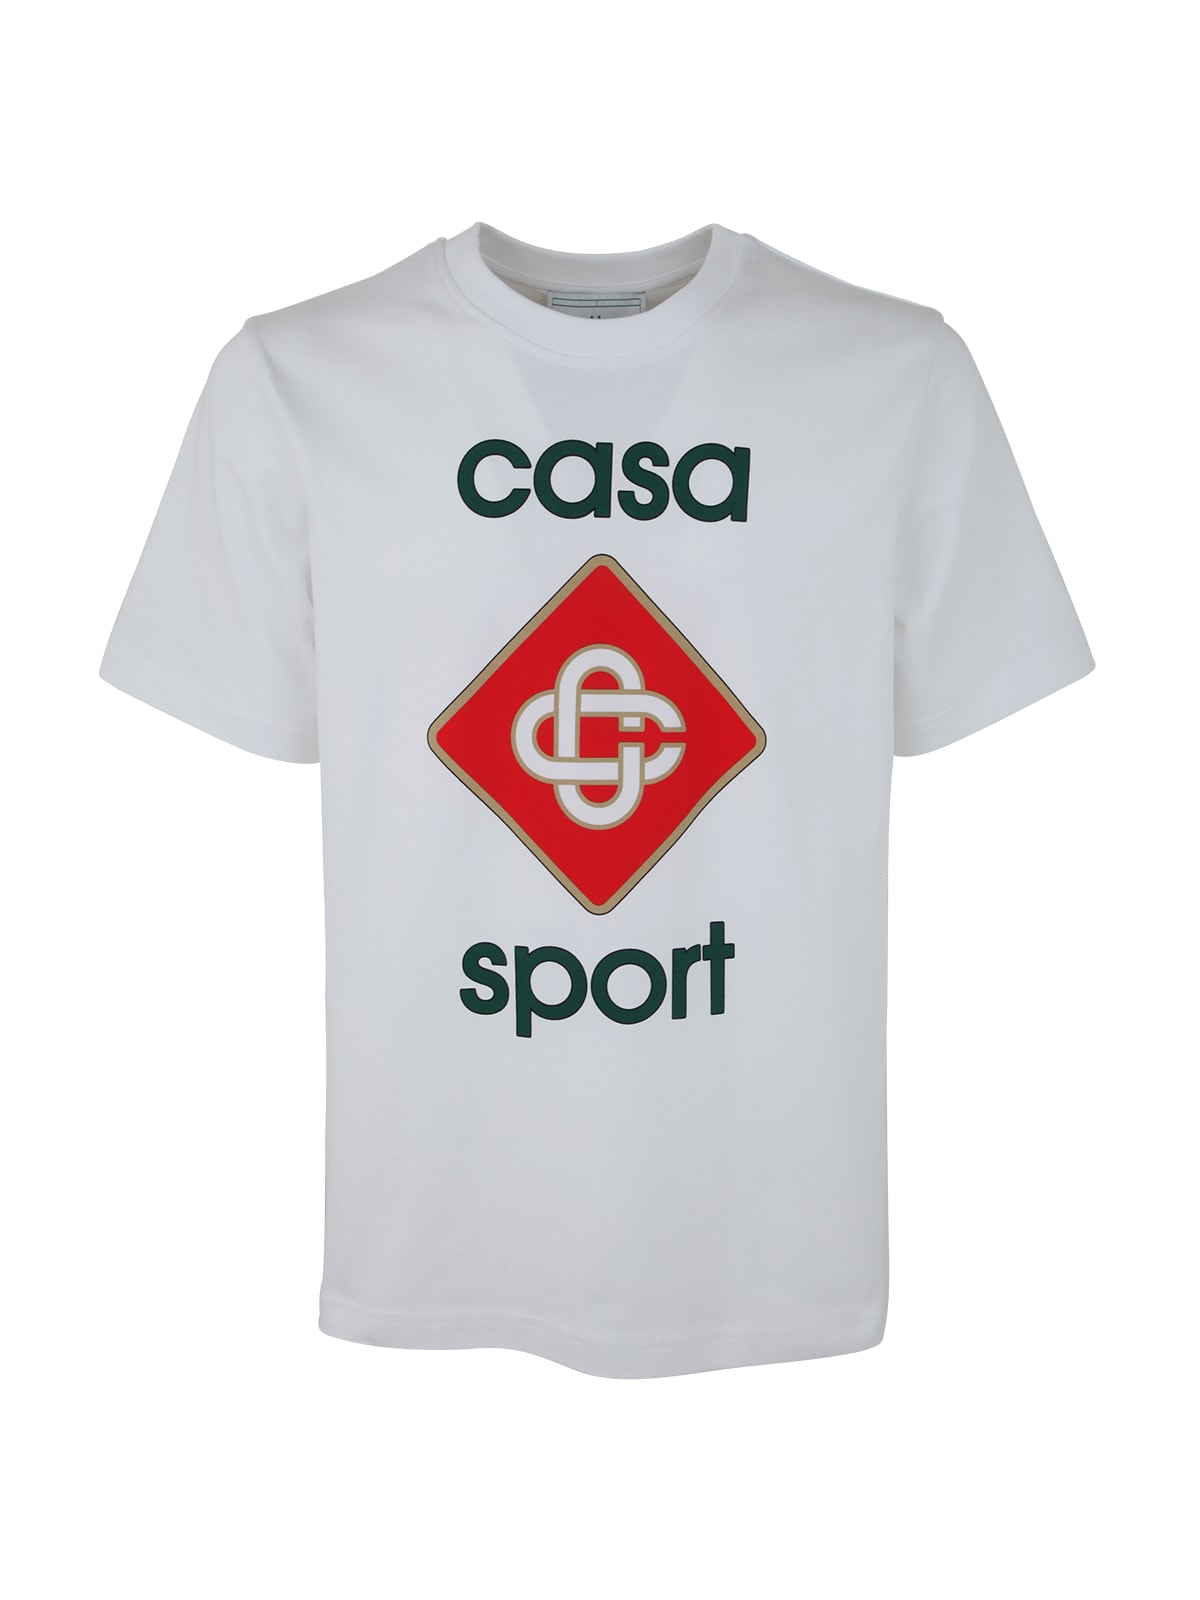 Casablanca Casa Sport Screen Printed Unise T-shirt